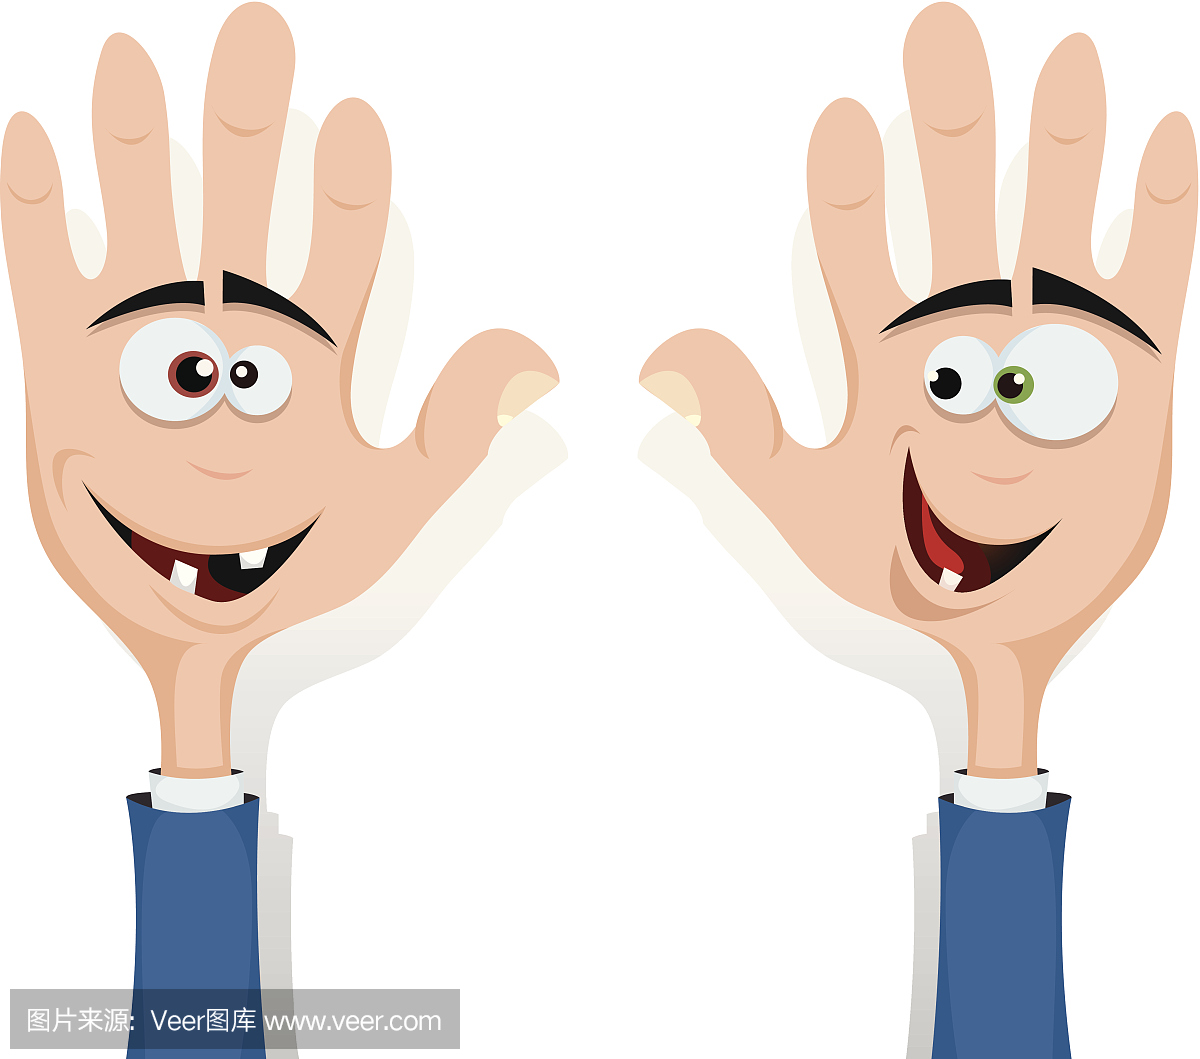 Hand Wearing 10 Finger Children Puppets Stock Vector - Image: 22308195